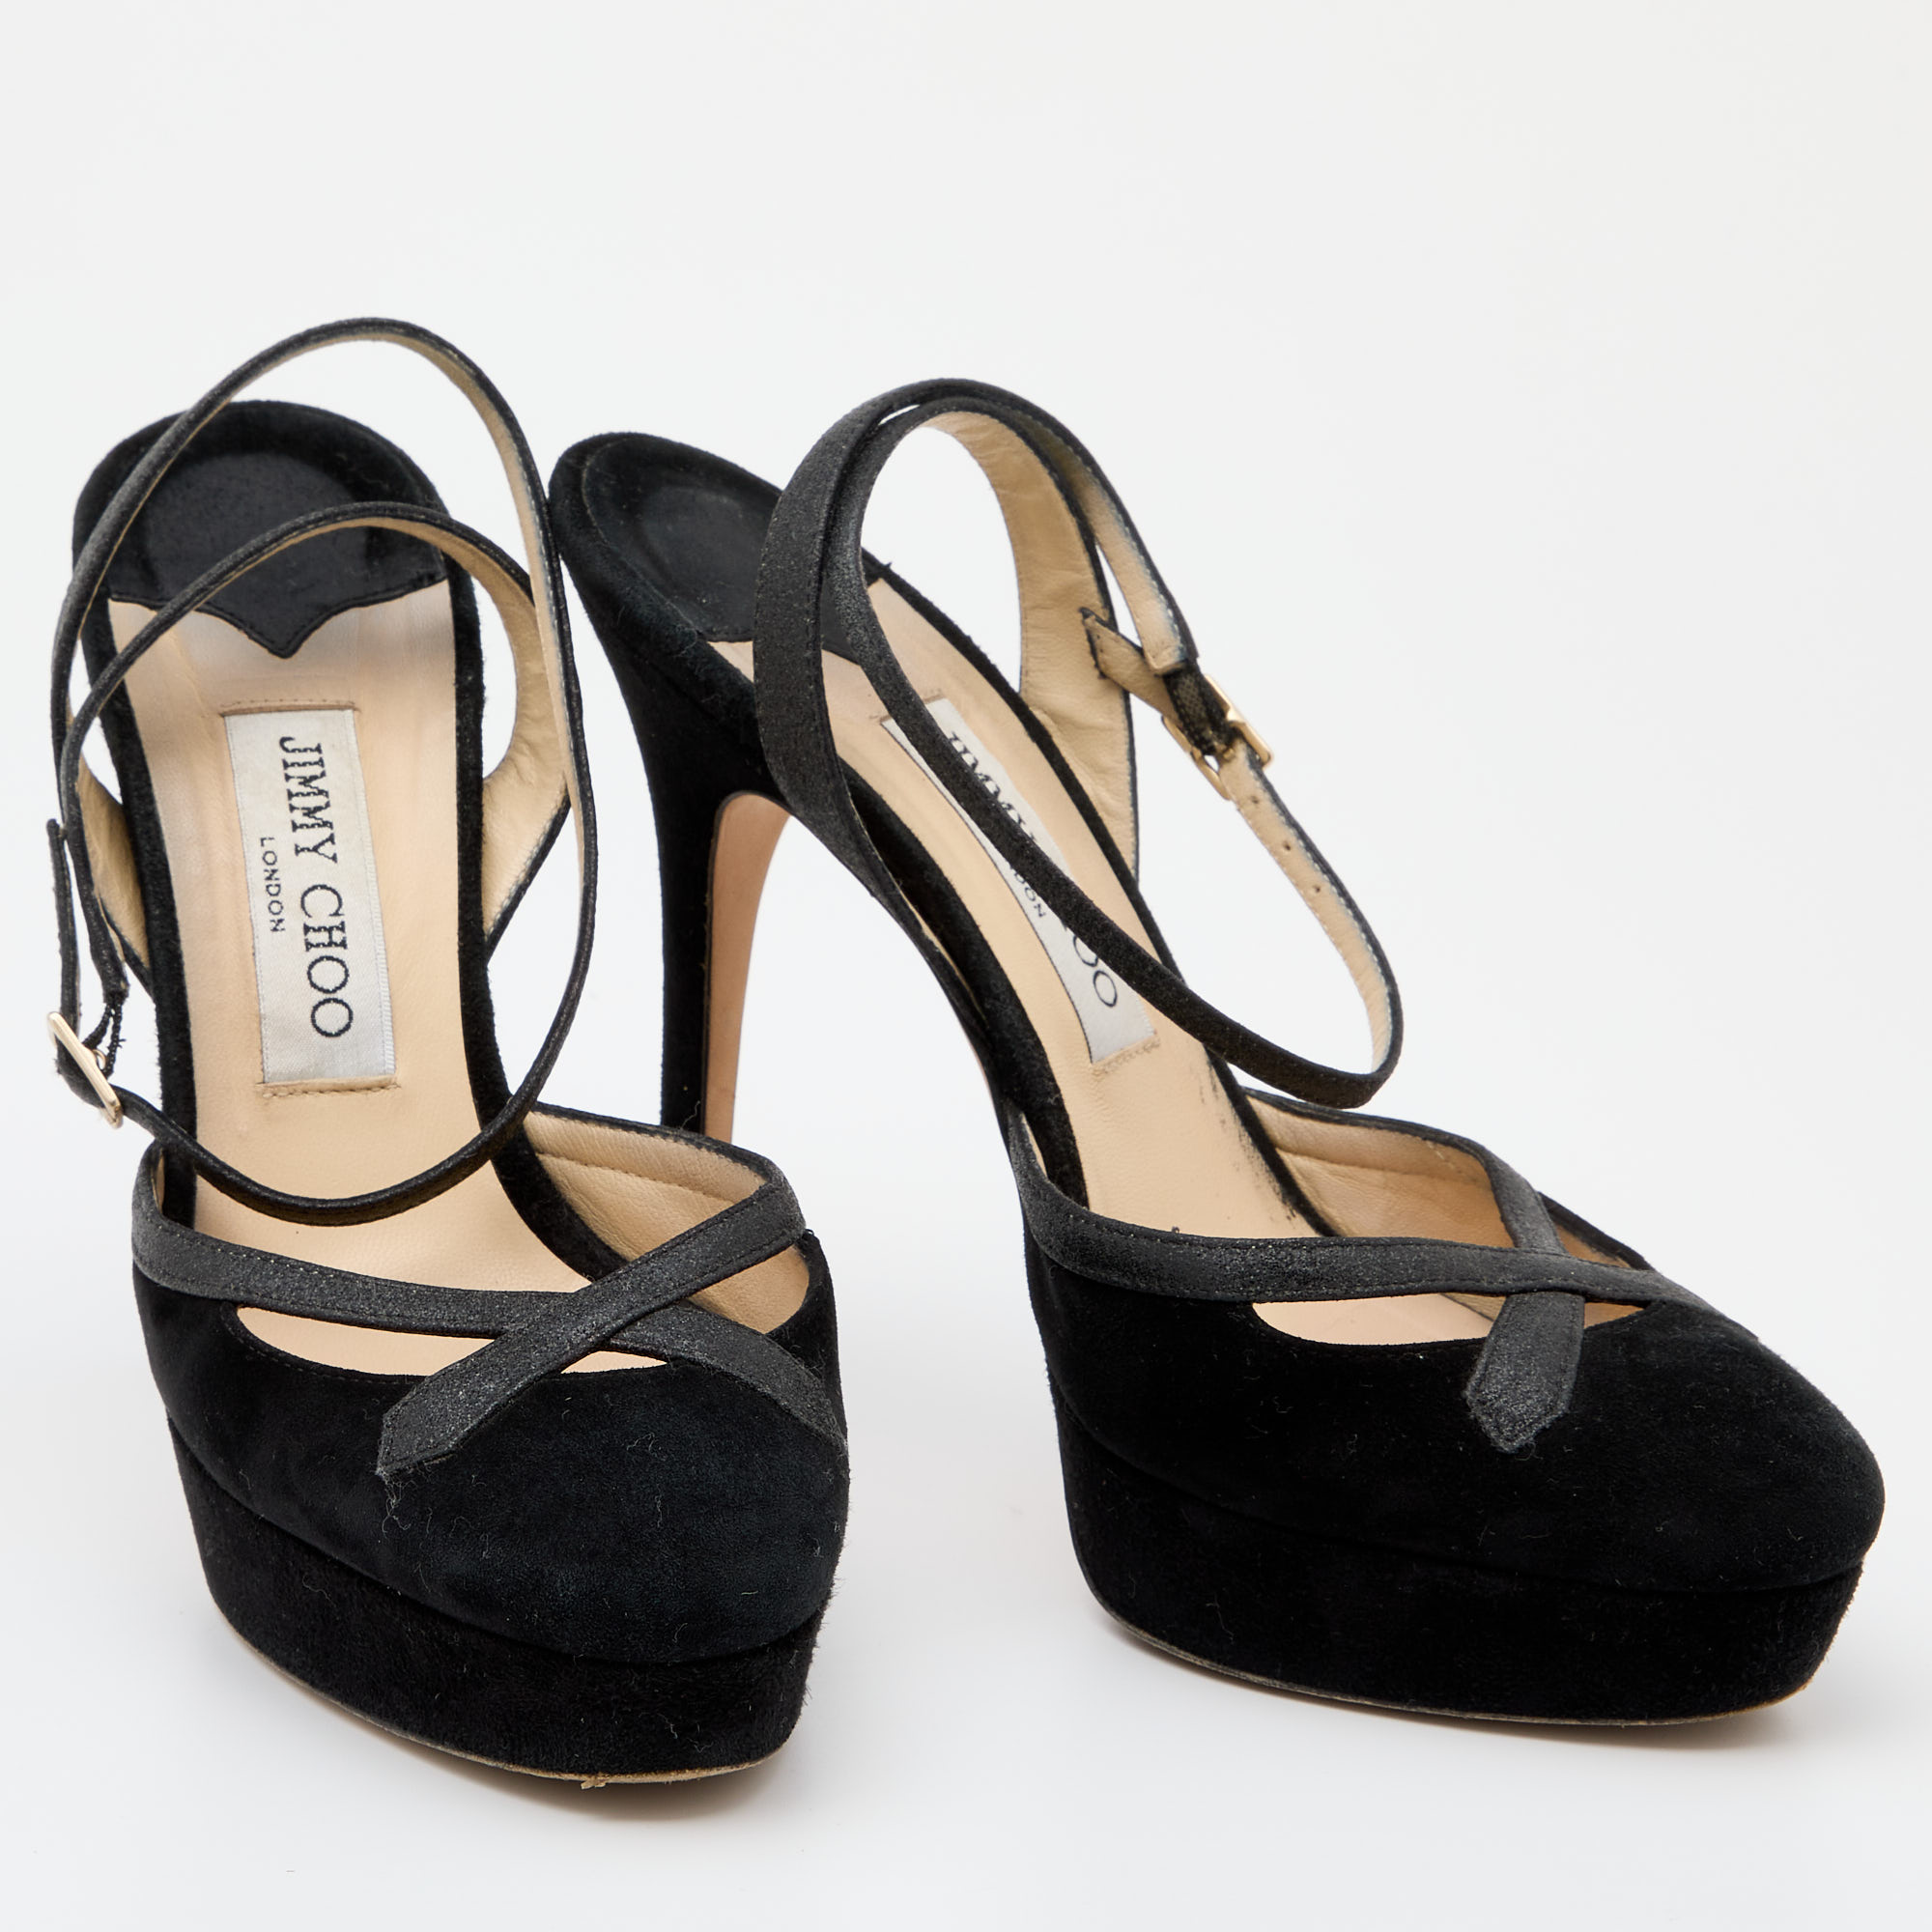 Jimmy Choo Black Suede And Glitter Ankle Strap Platform Sandals Size 39